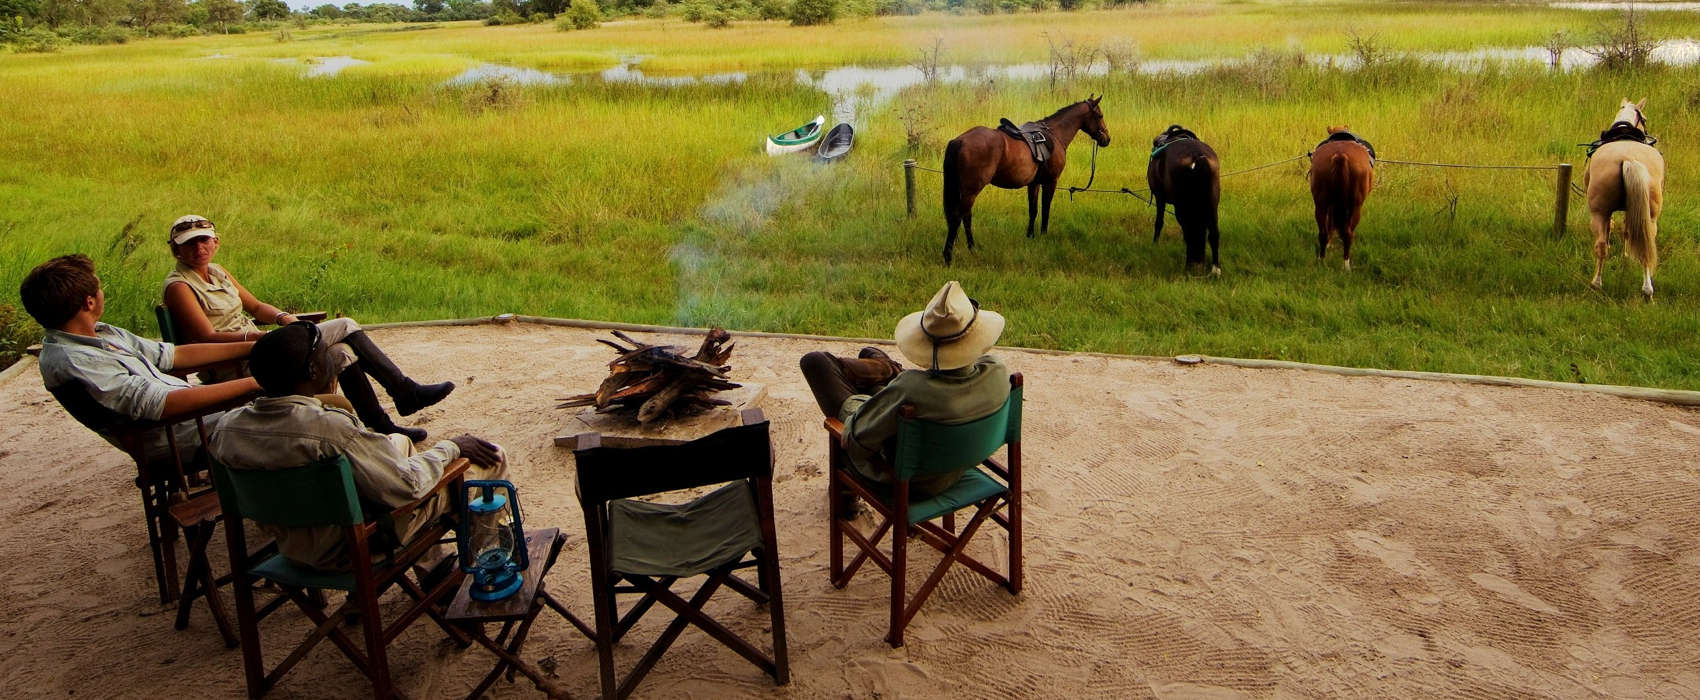 Botswana horseriding safari holidays